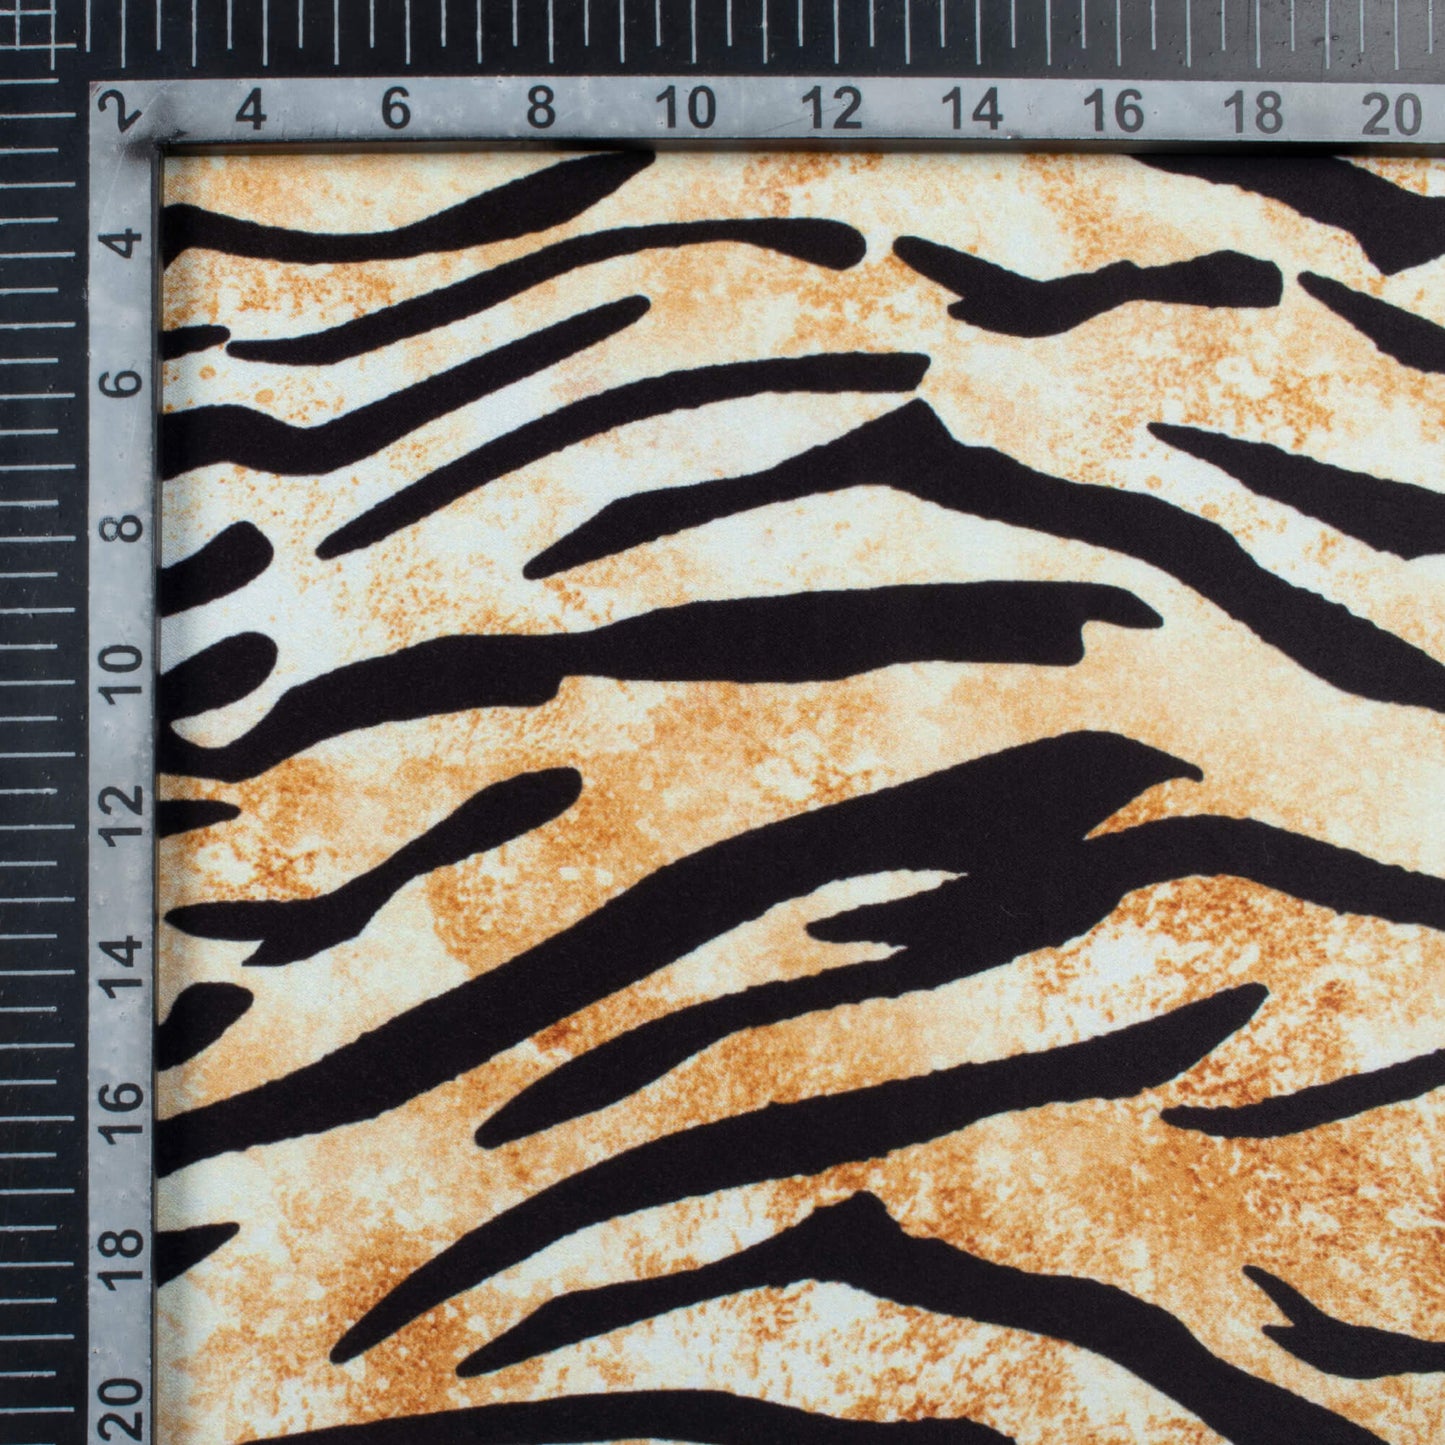 Tortilla Brown And Black Animal Pattern Digital Print Lush Satin Fabric